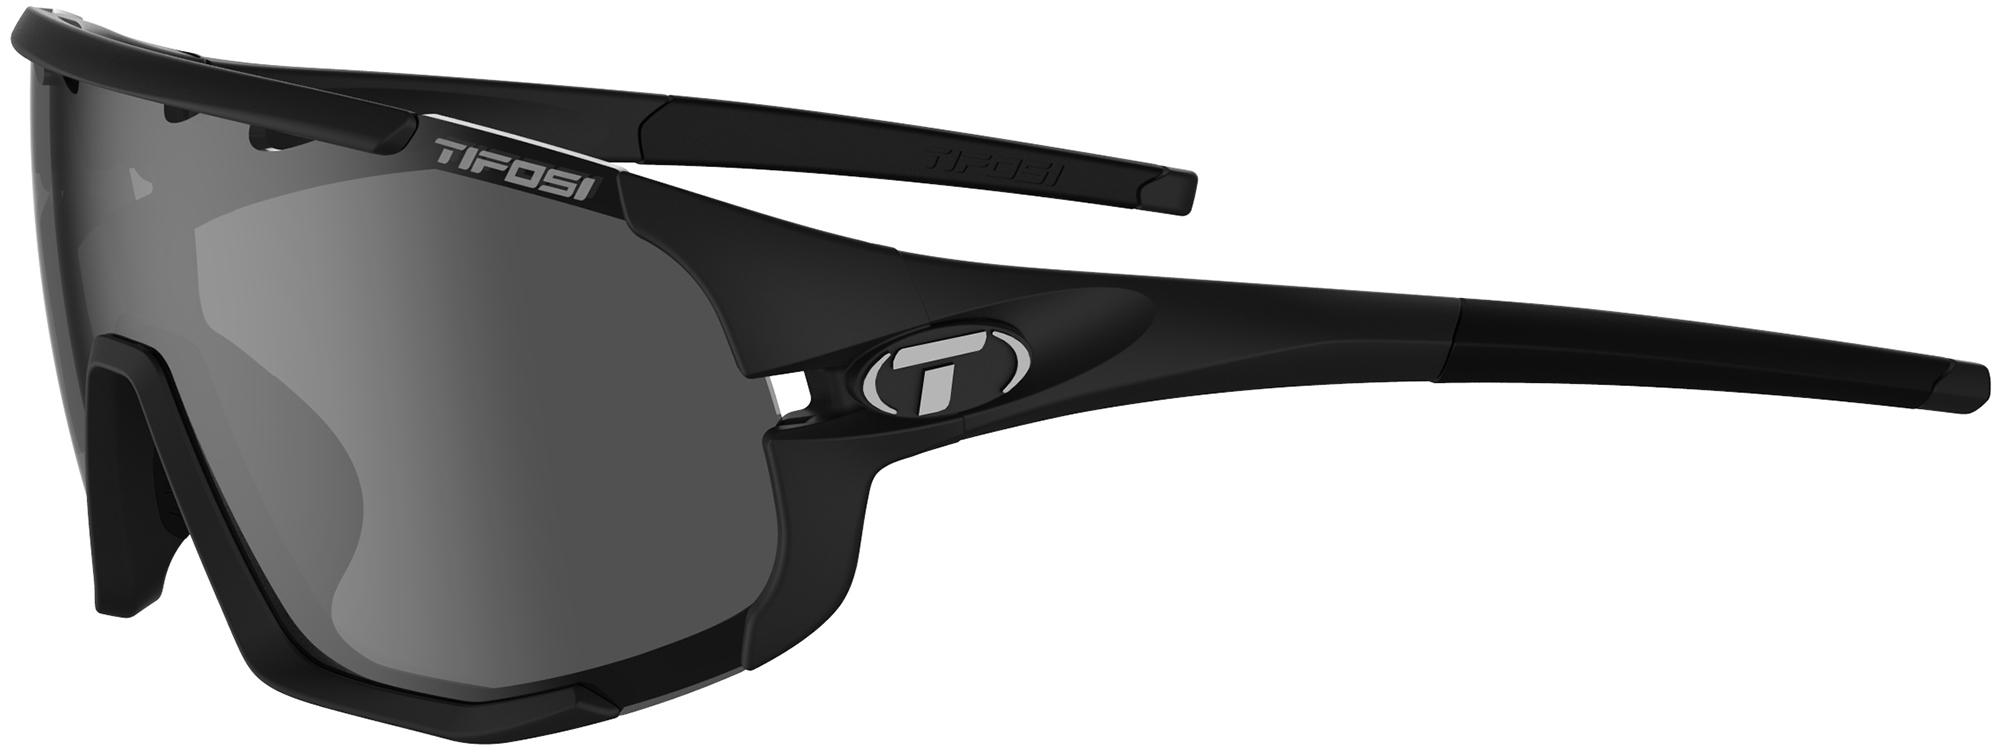 Tifosi Eyewear Sledge Matte Interchangeable Lens Sunglasses - Matte Black